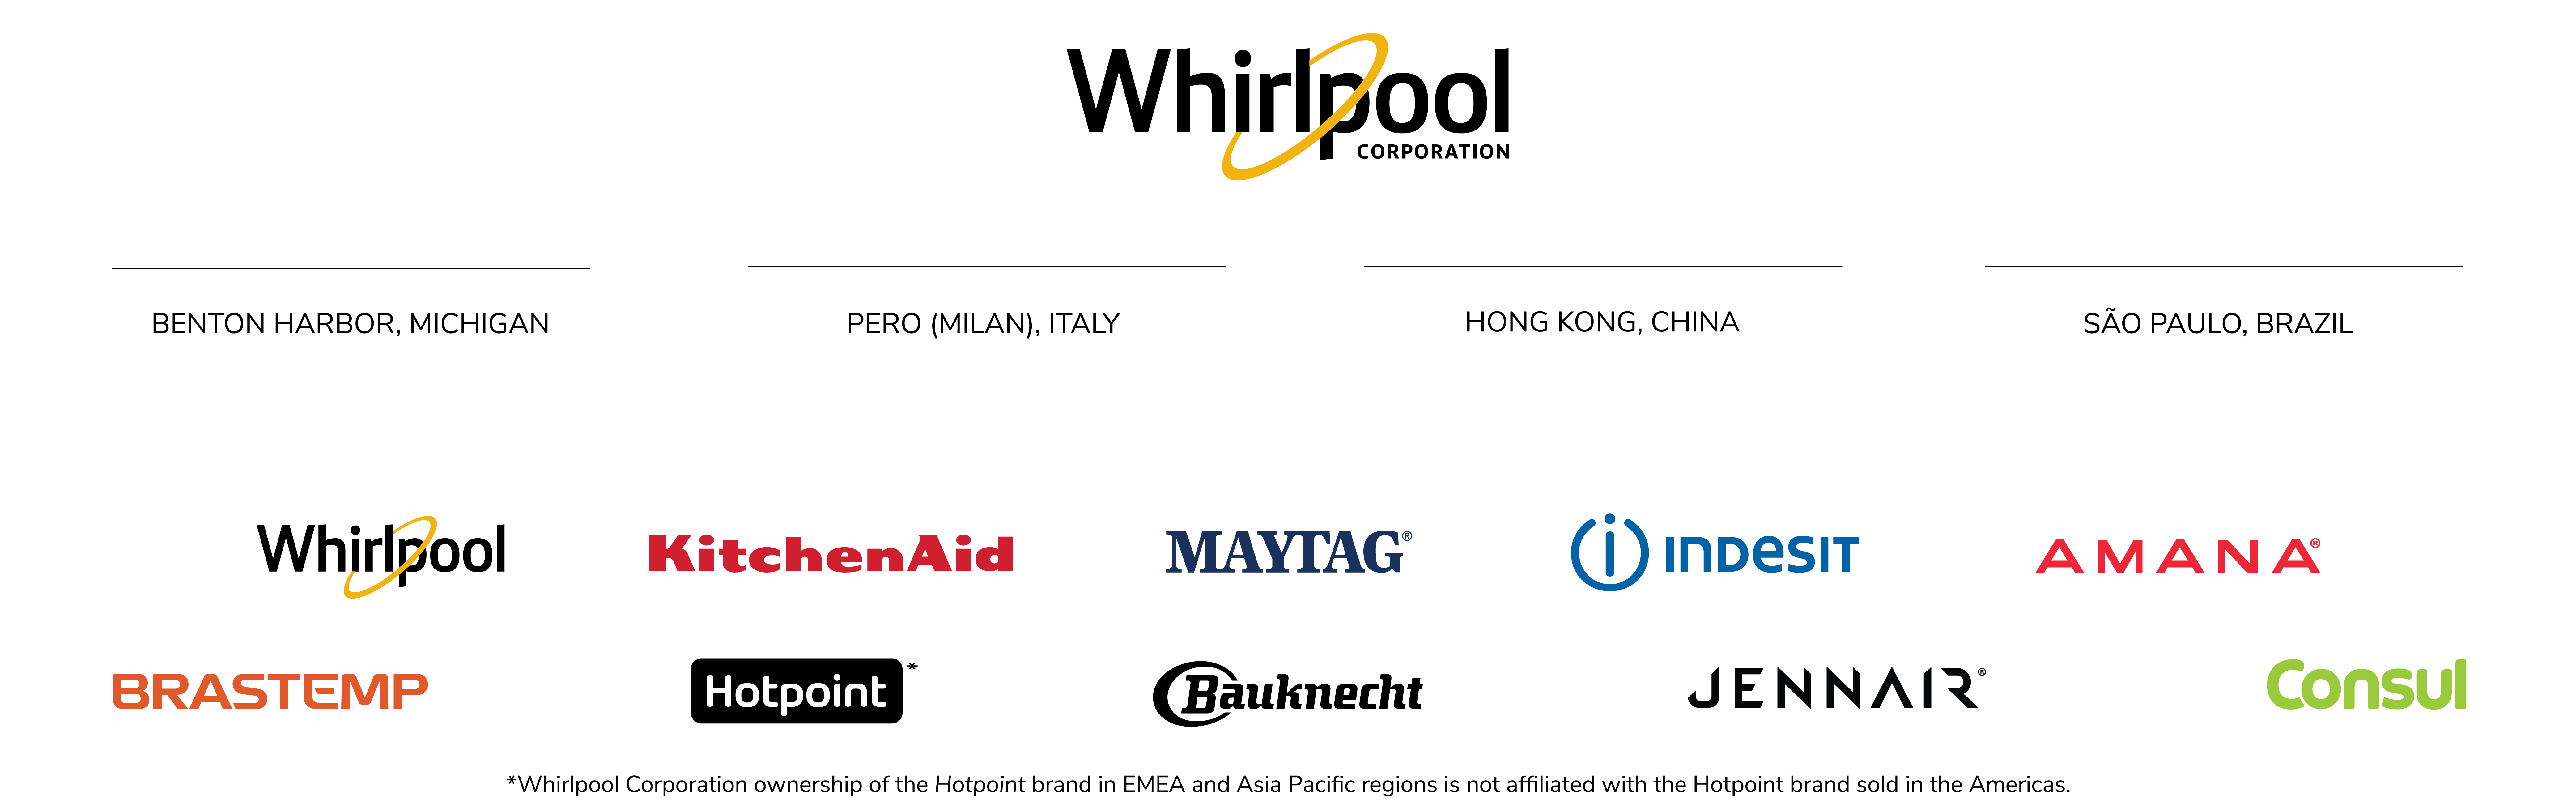 Whirlpool Corporation major brands and logos